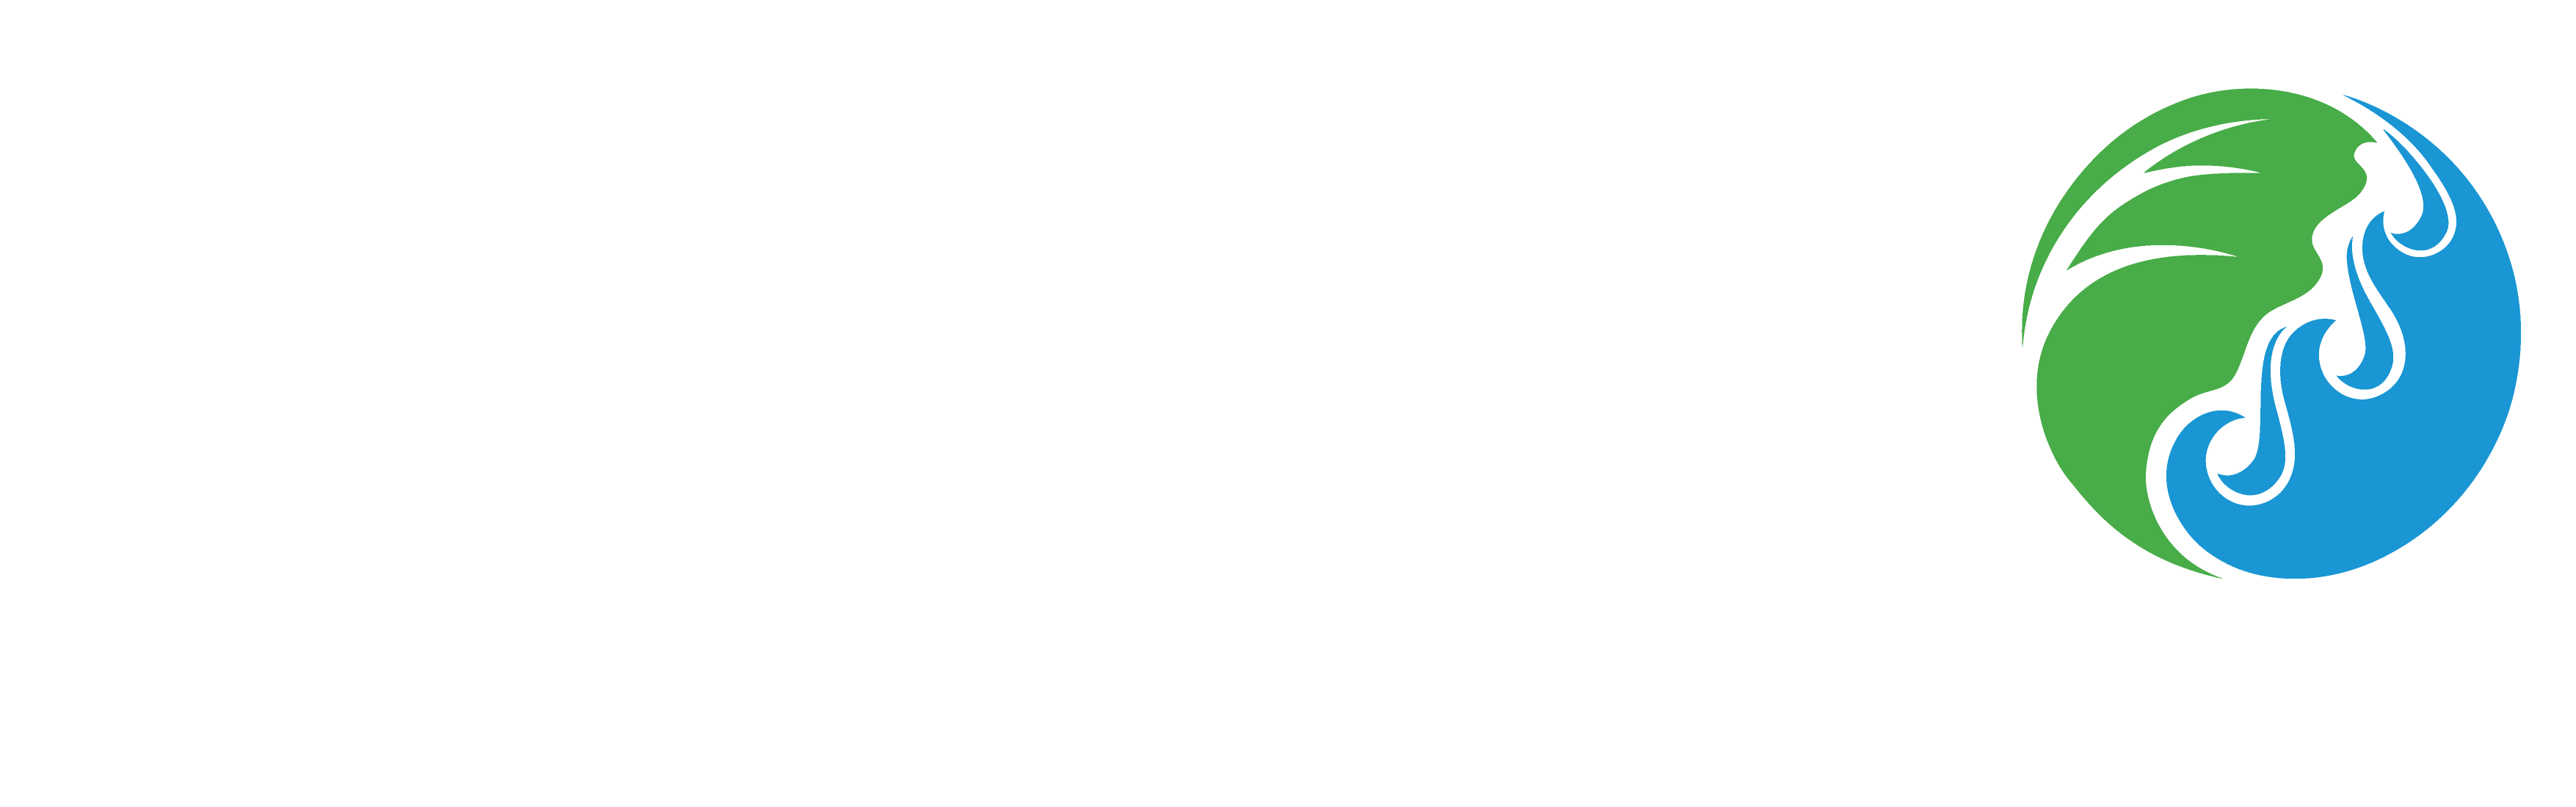 Yayasan Konservasi Alam Nusantara